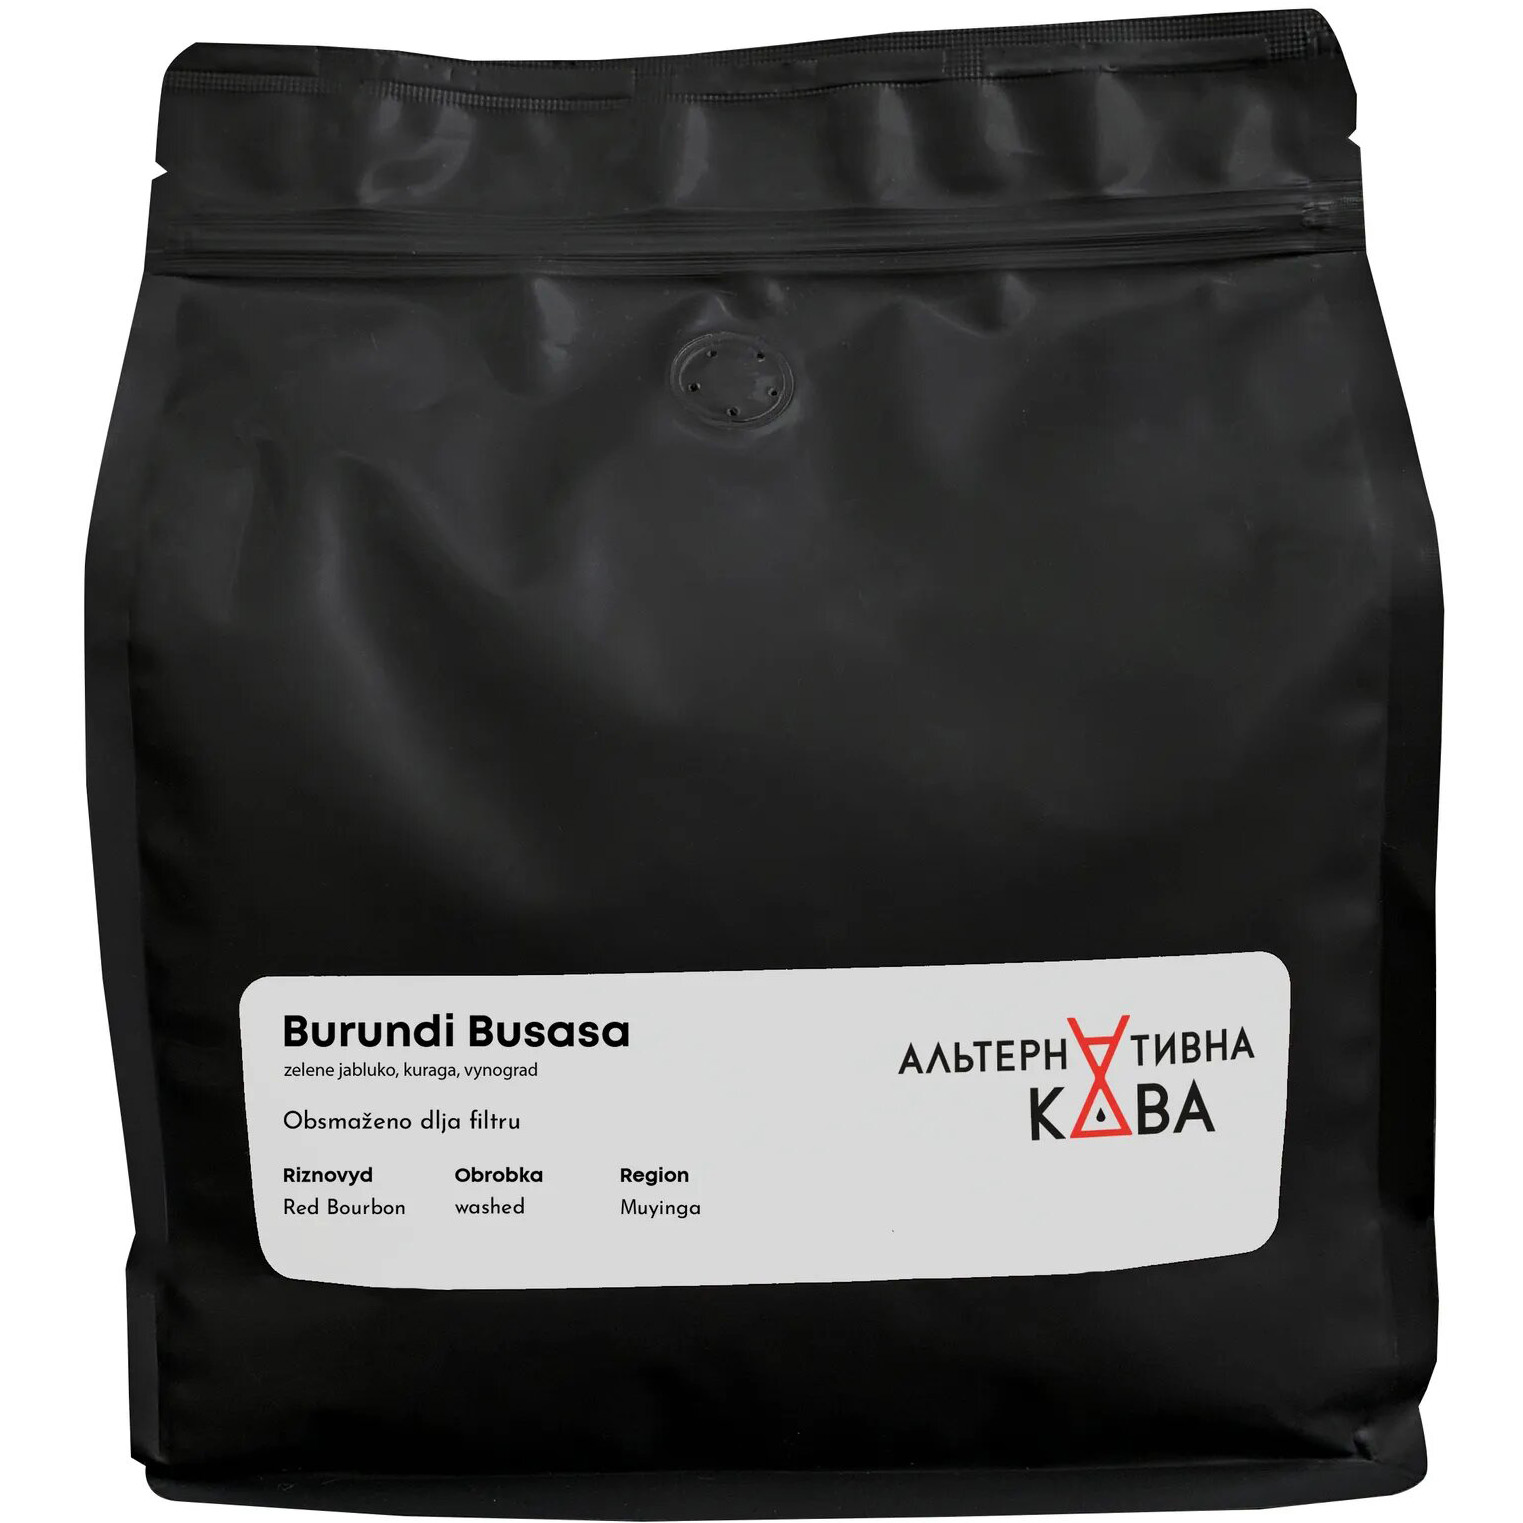 Кава в зернах Альтернативна Кава Burundi Busasa арабіка 1 кг - фото 1